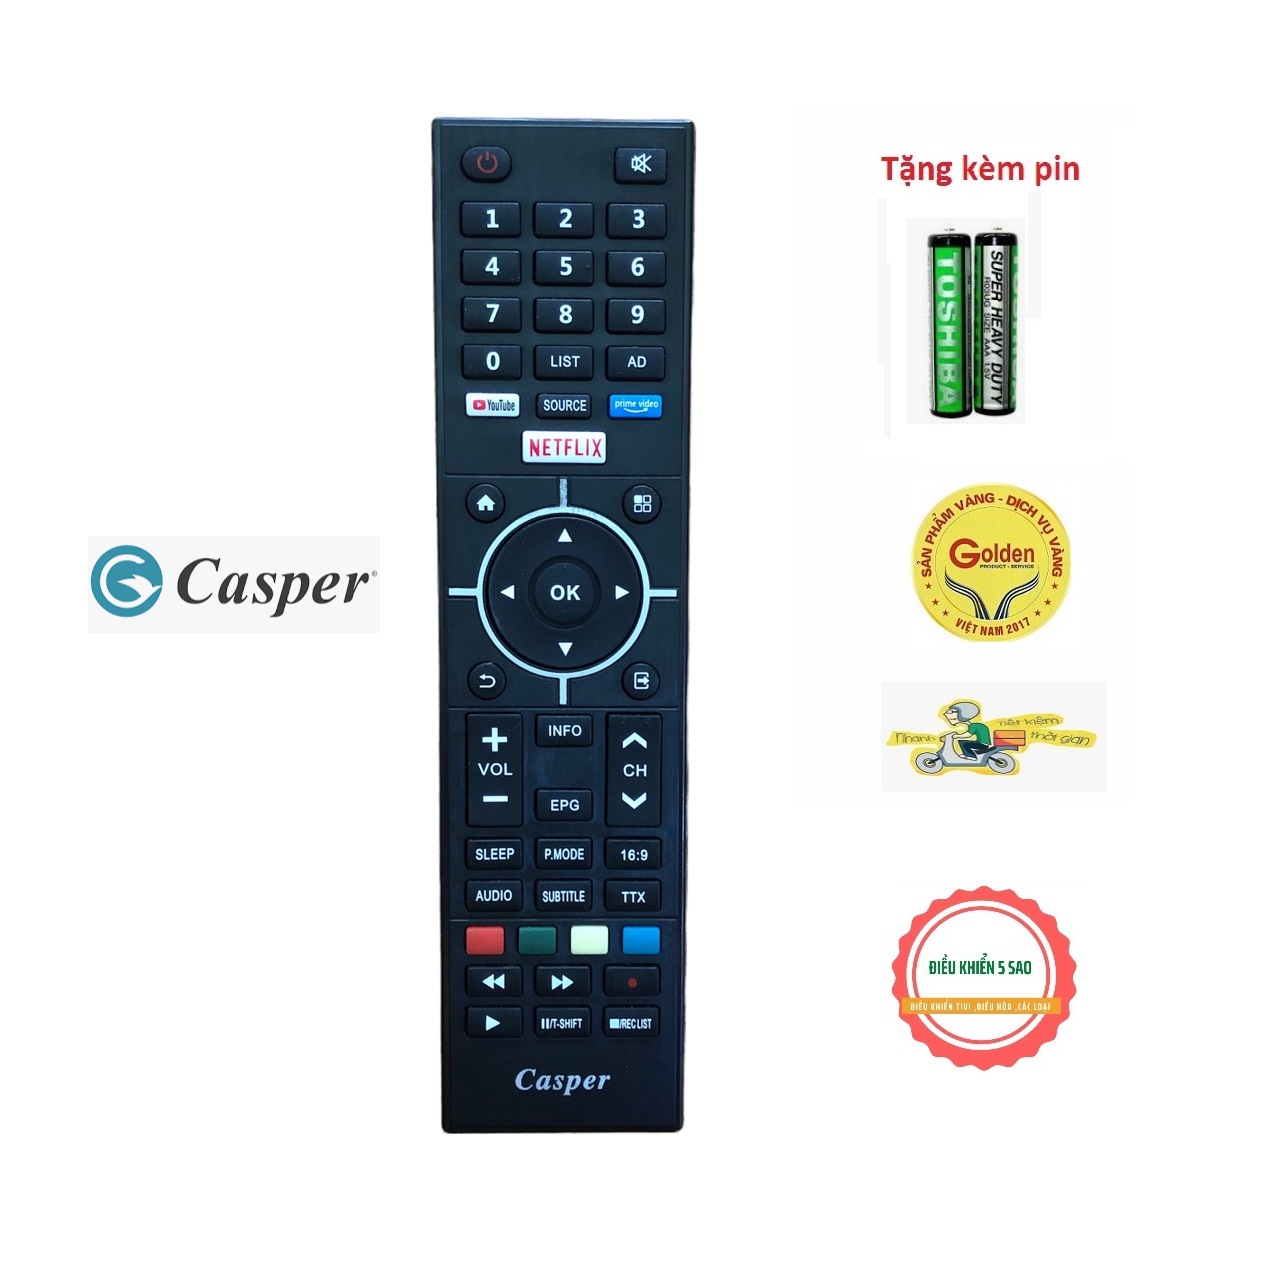 Điều khiển tivi Casper  32HX6200 - 32 inch HD có smart internet loại tốt zin theo máy có nút Netflix ở giữa - Remote tivi Casper   32HX6200 có internet loại tốt zin - đầu bấm tivi Casper 32HX6200 - 32 inch có internet HD